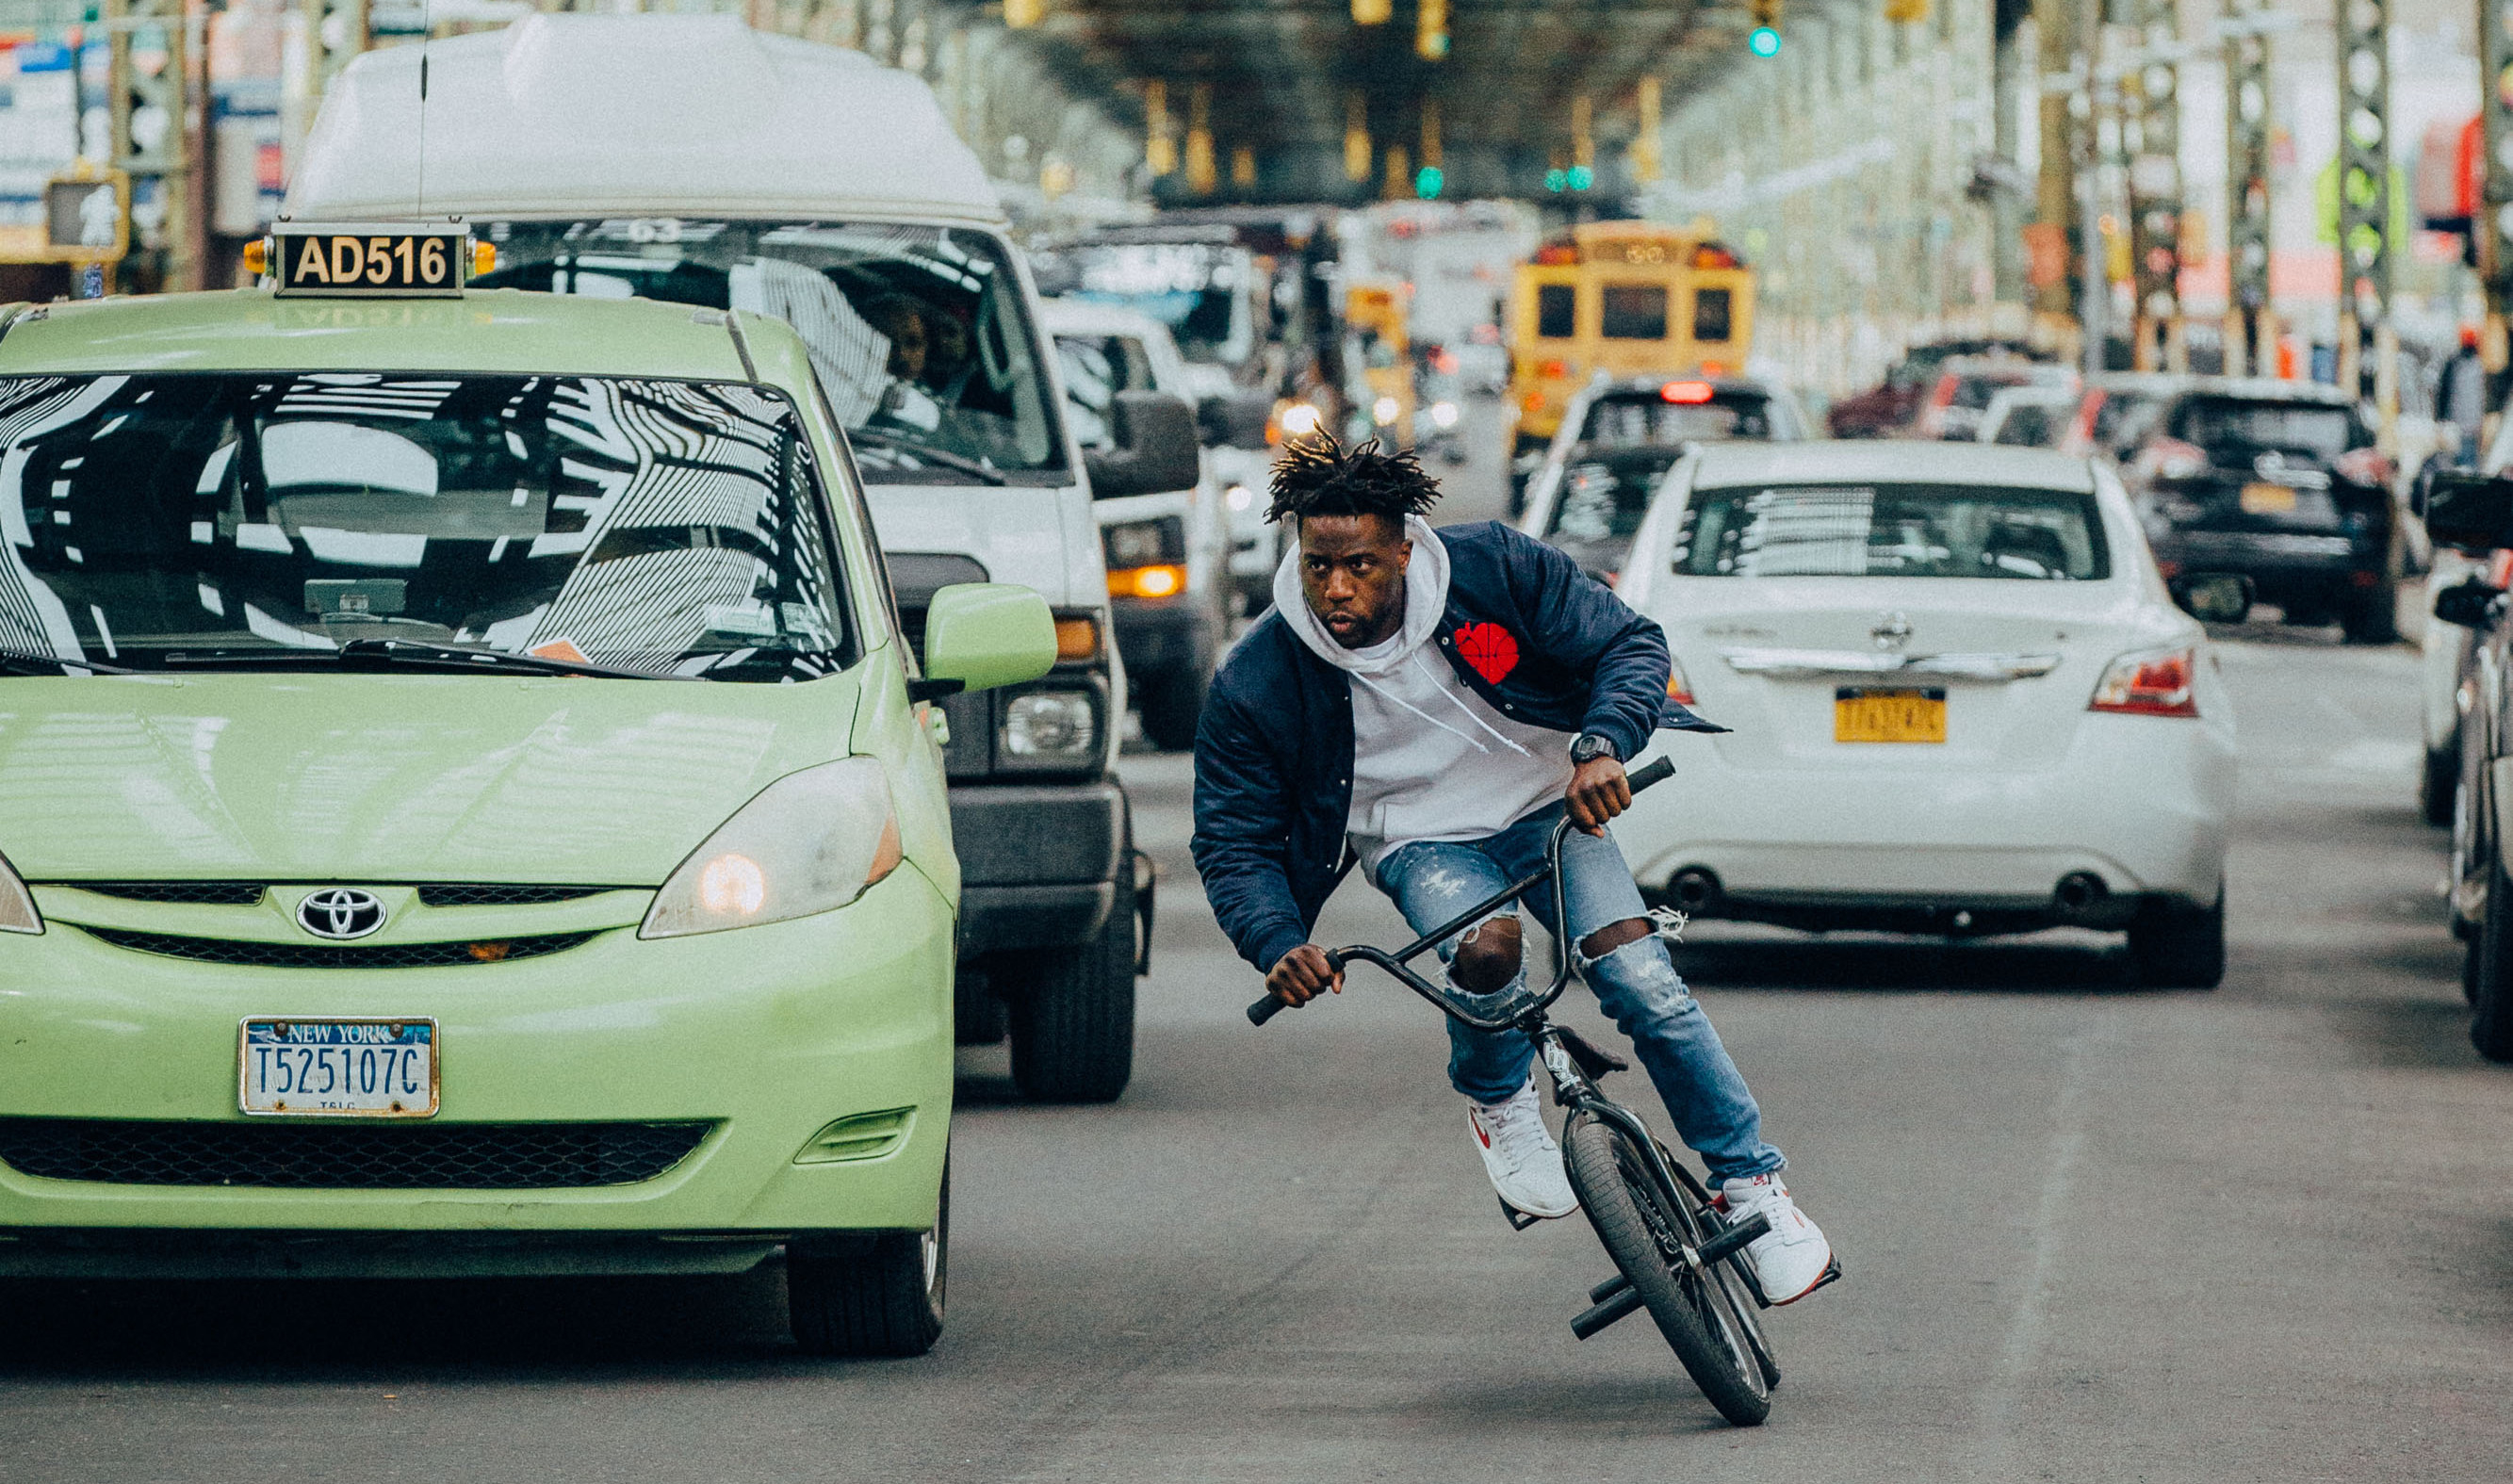 Professional BMX rider Nigel Sylvester rides through a busy street